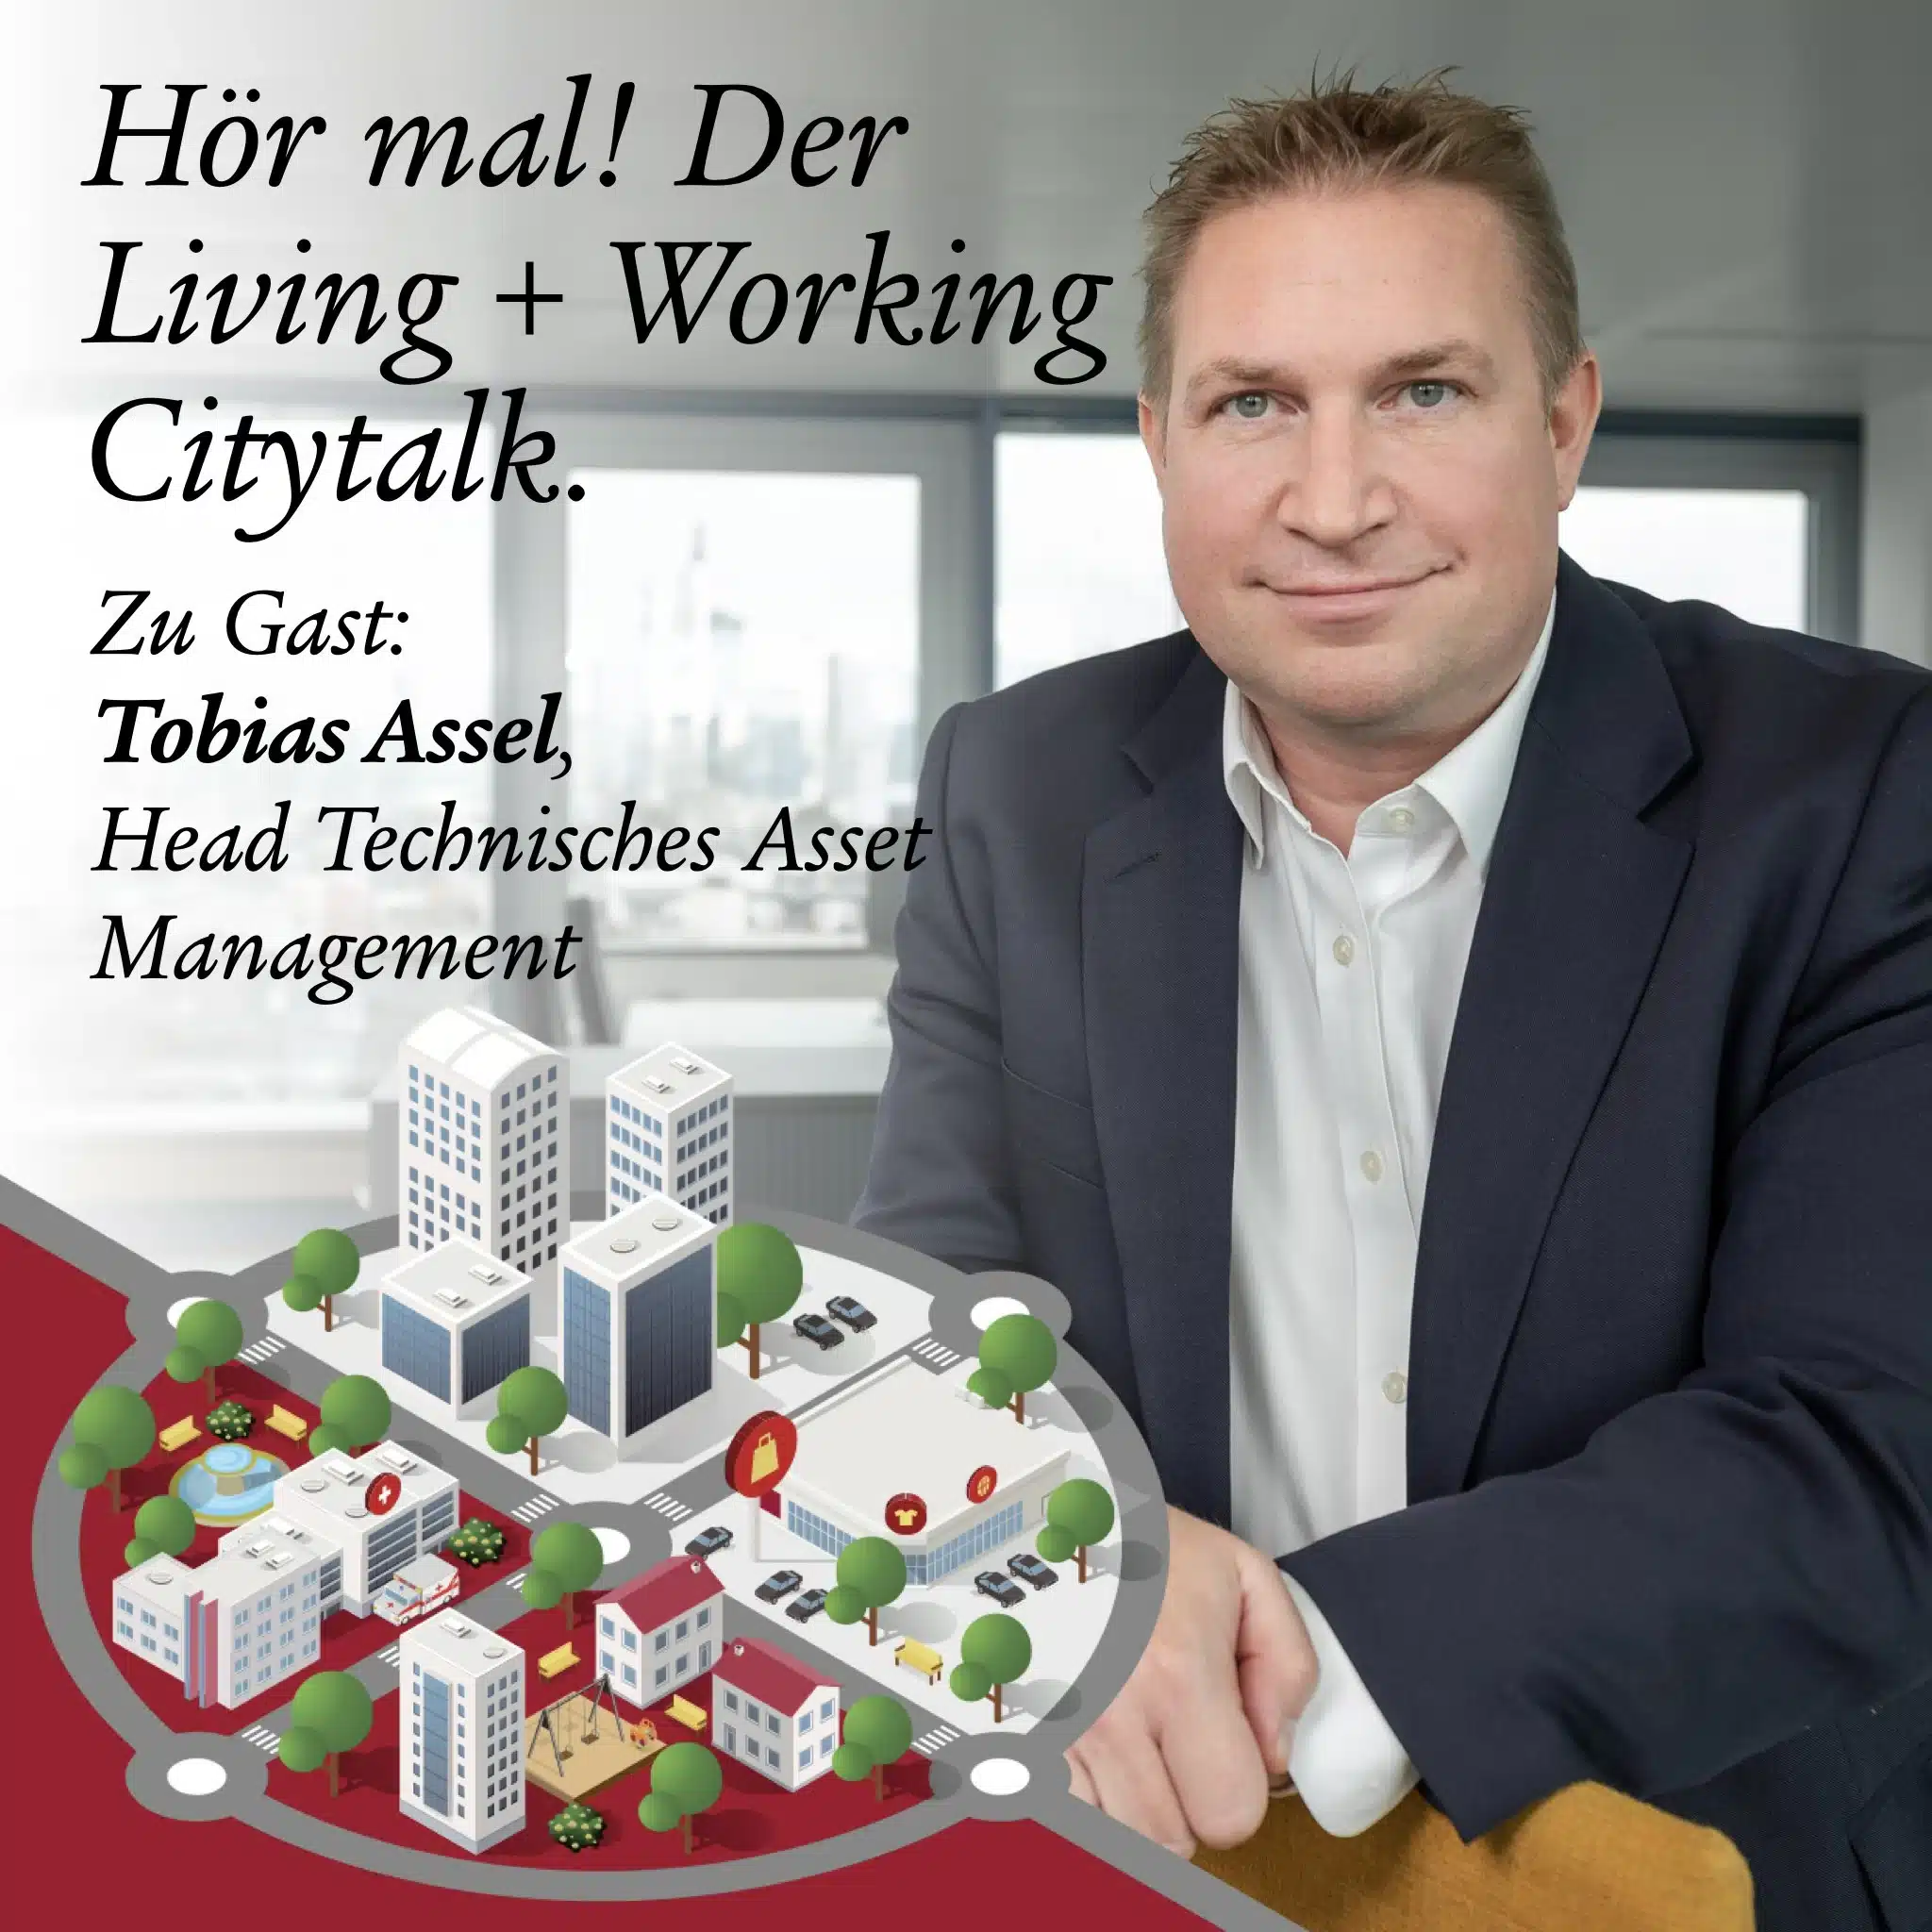 Tobias Assel, Head Technical Asset Management